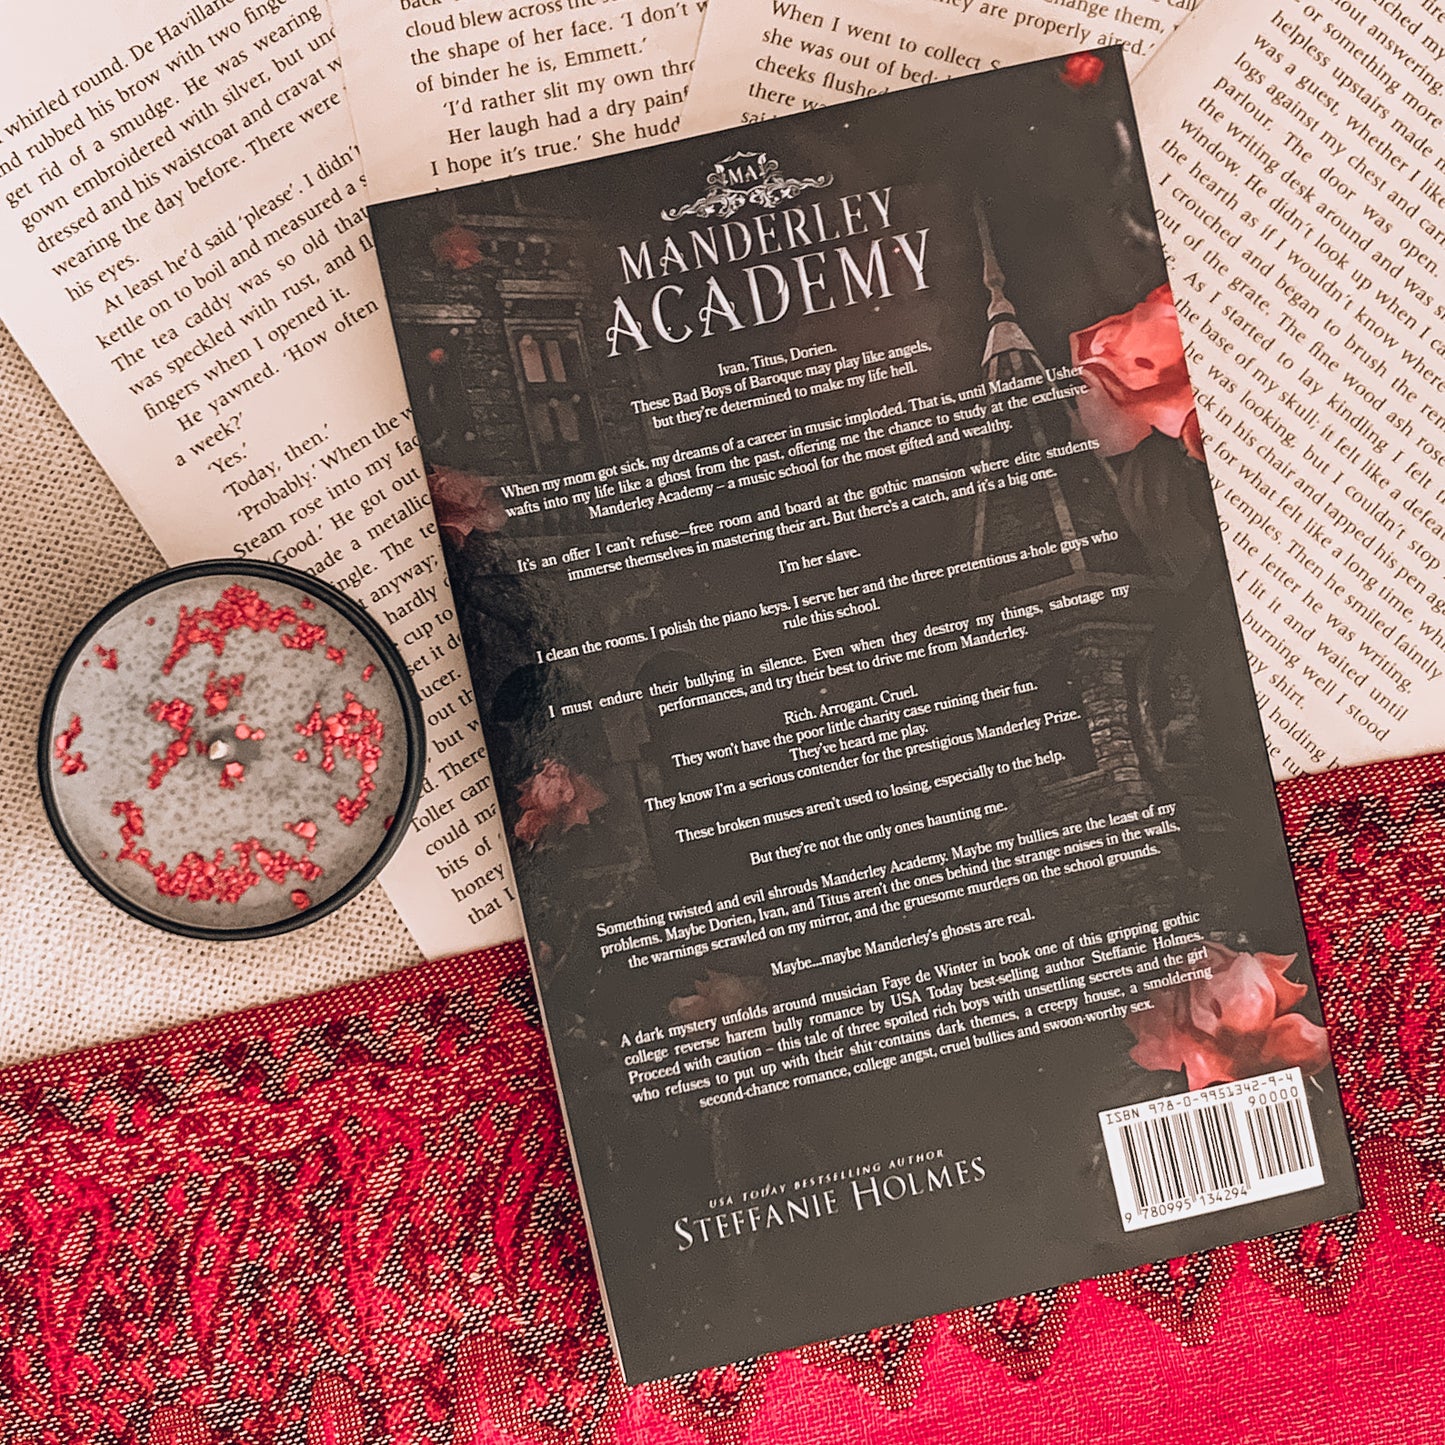 Manderley Academy series by Steffanie Holmes